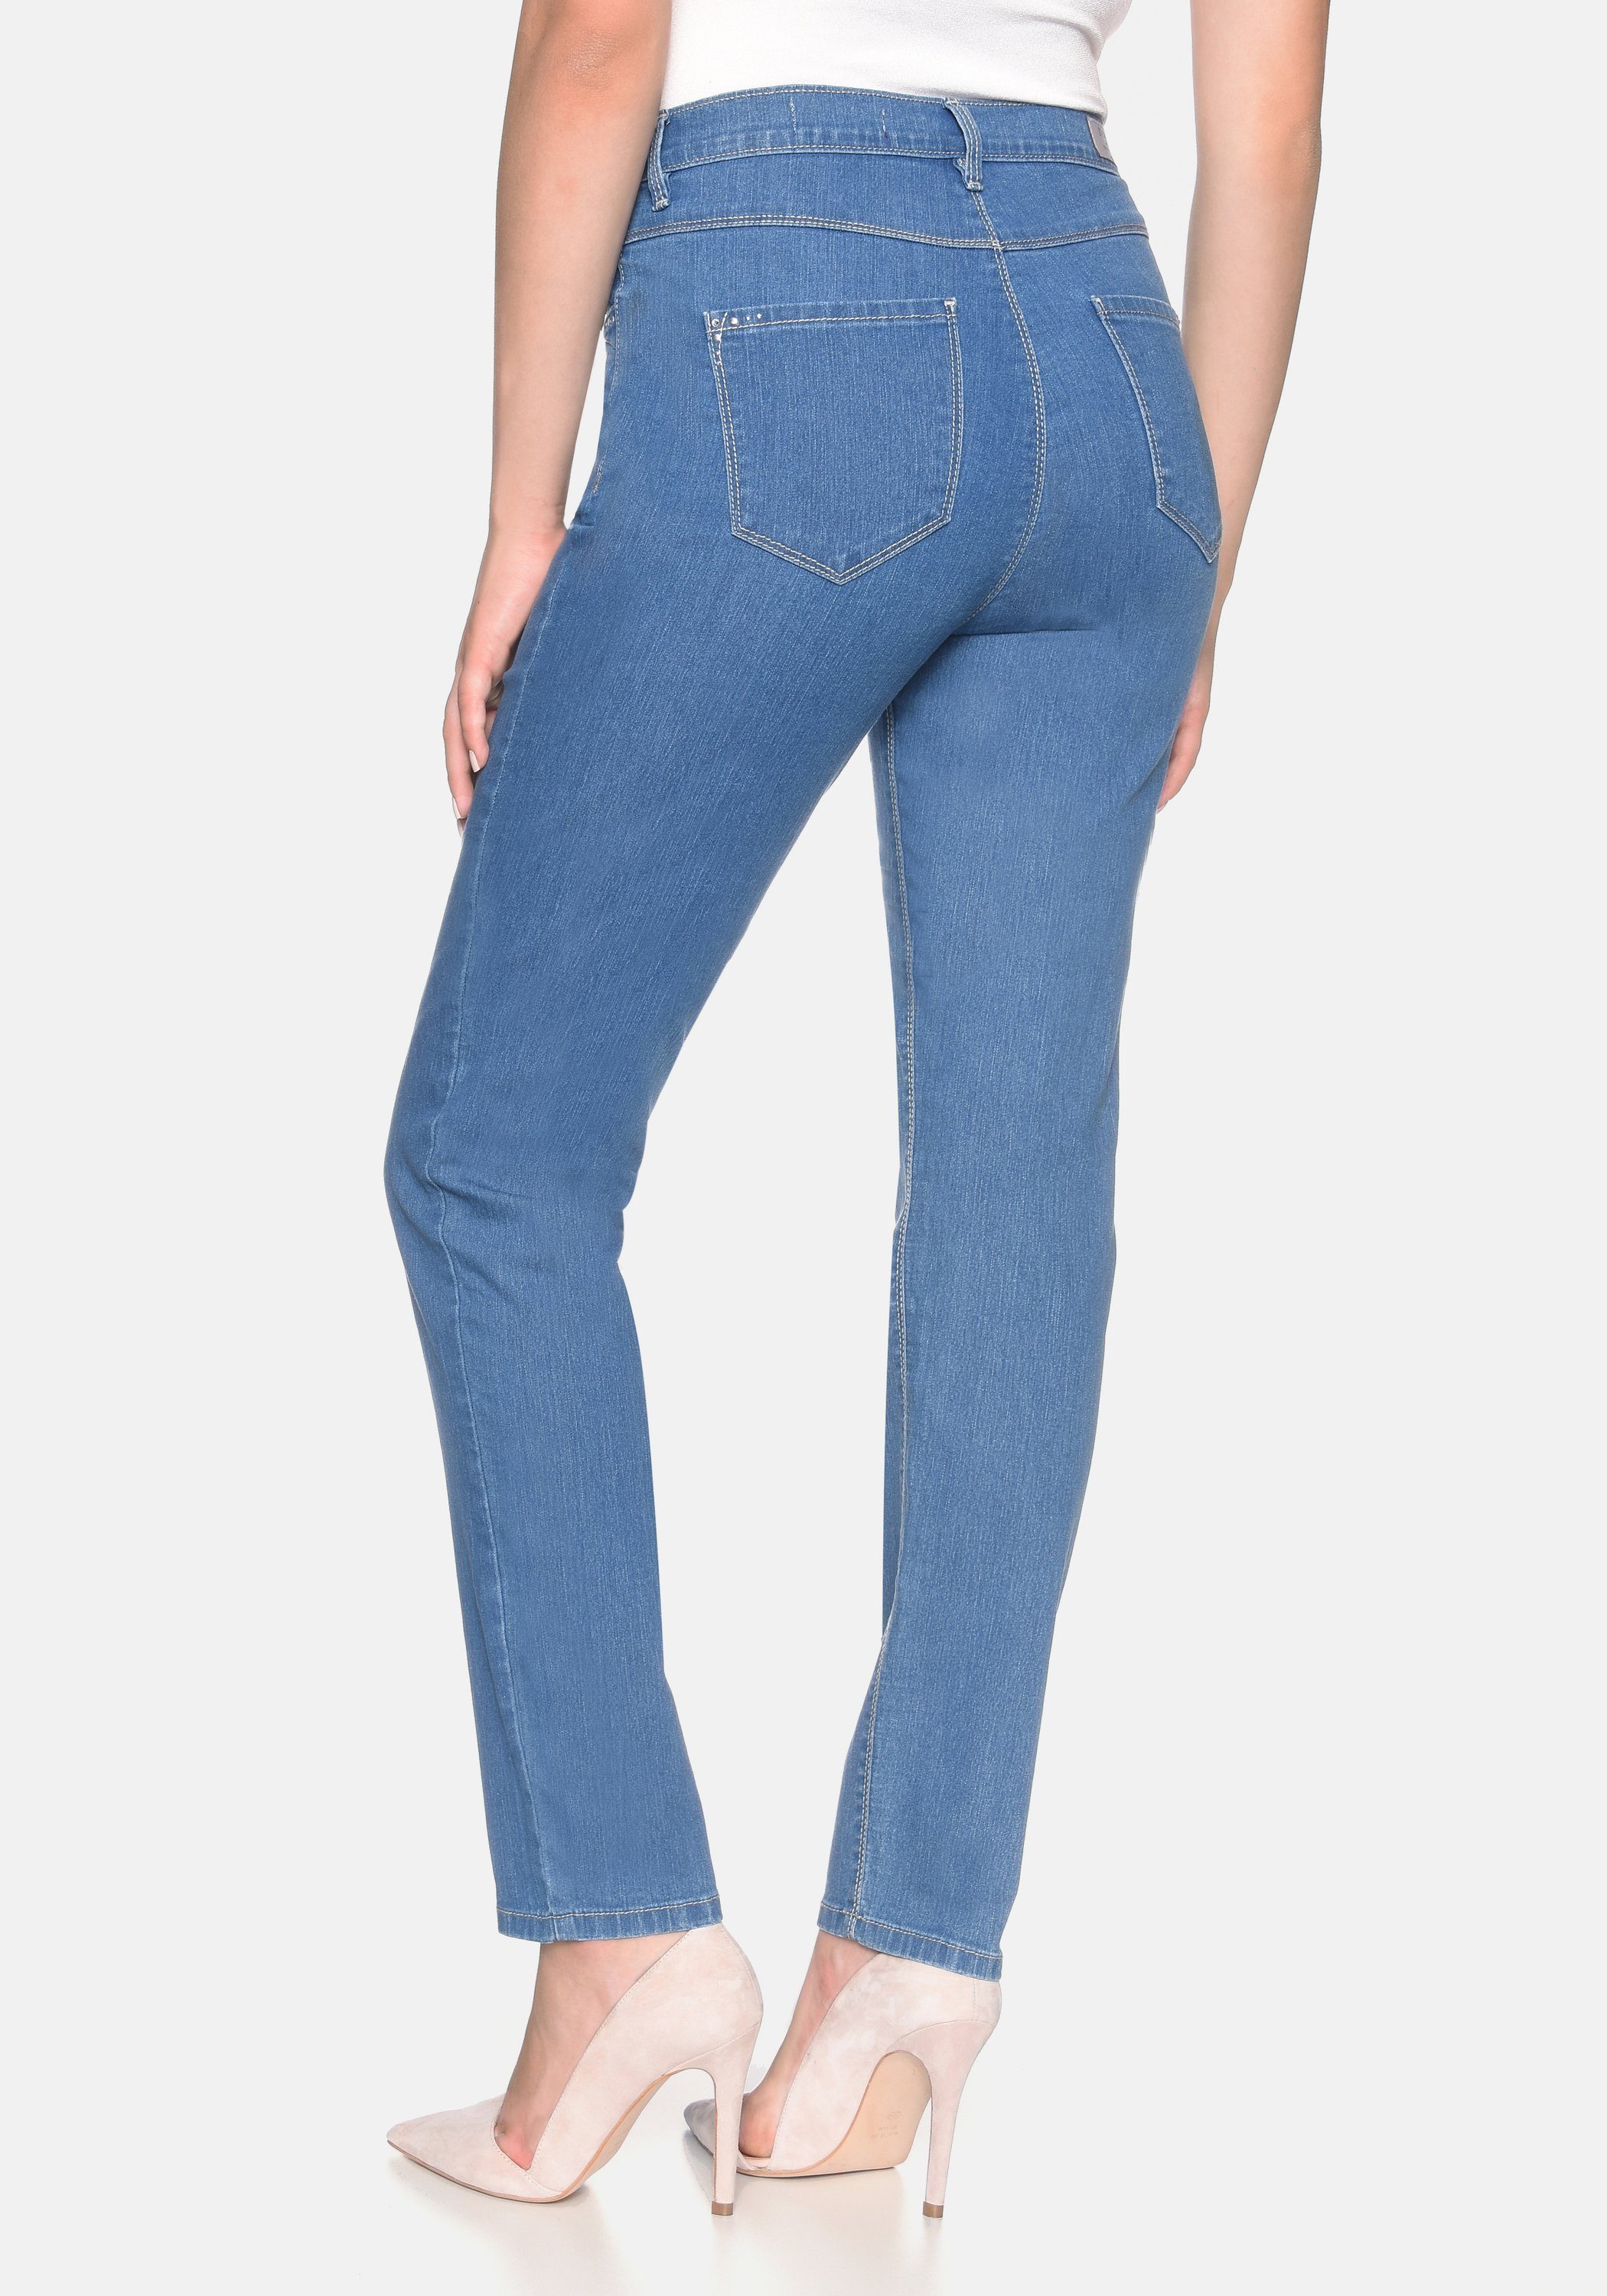 light used Denim STOOKER Tapered Fit 5-Pocket-Jeans blue WOMEN Nizza